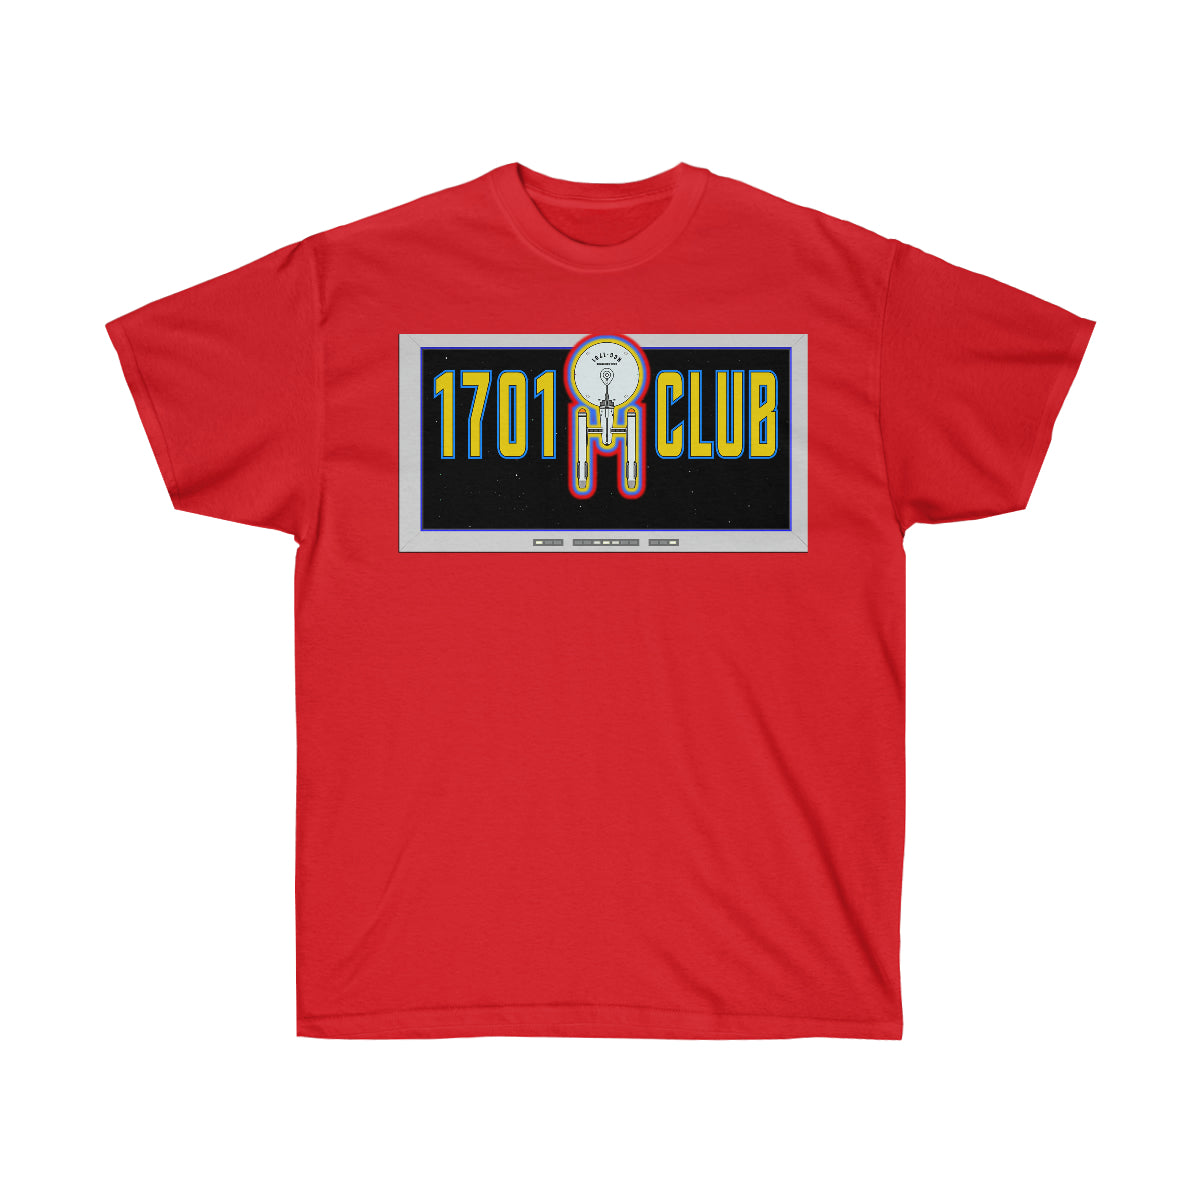 1701 Club Shirt - TOS Enterprise and View Screen